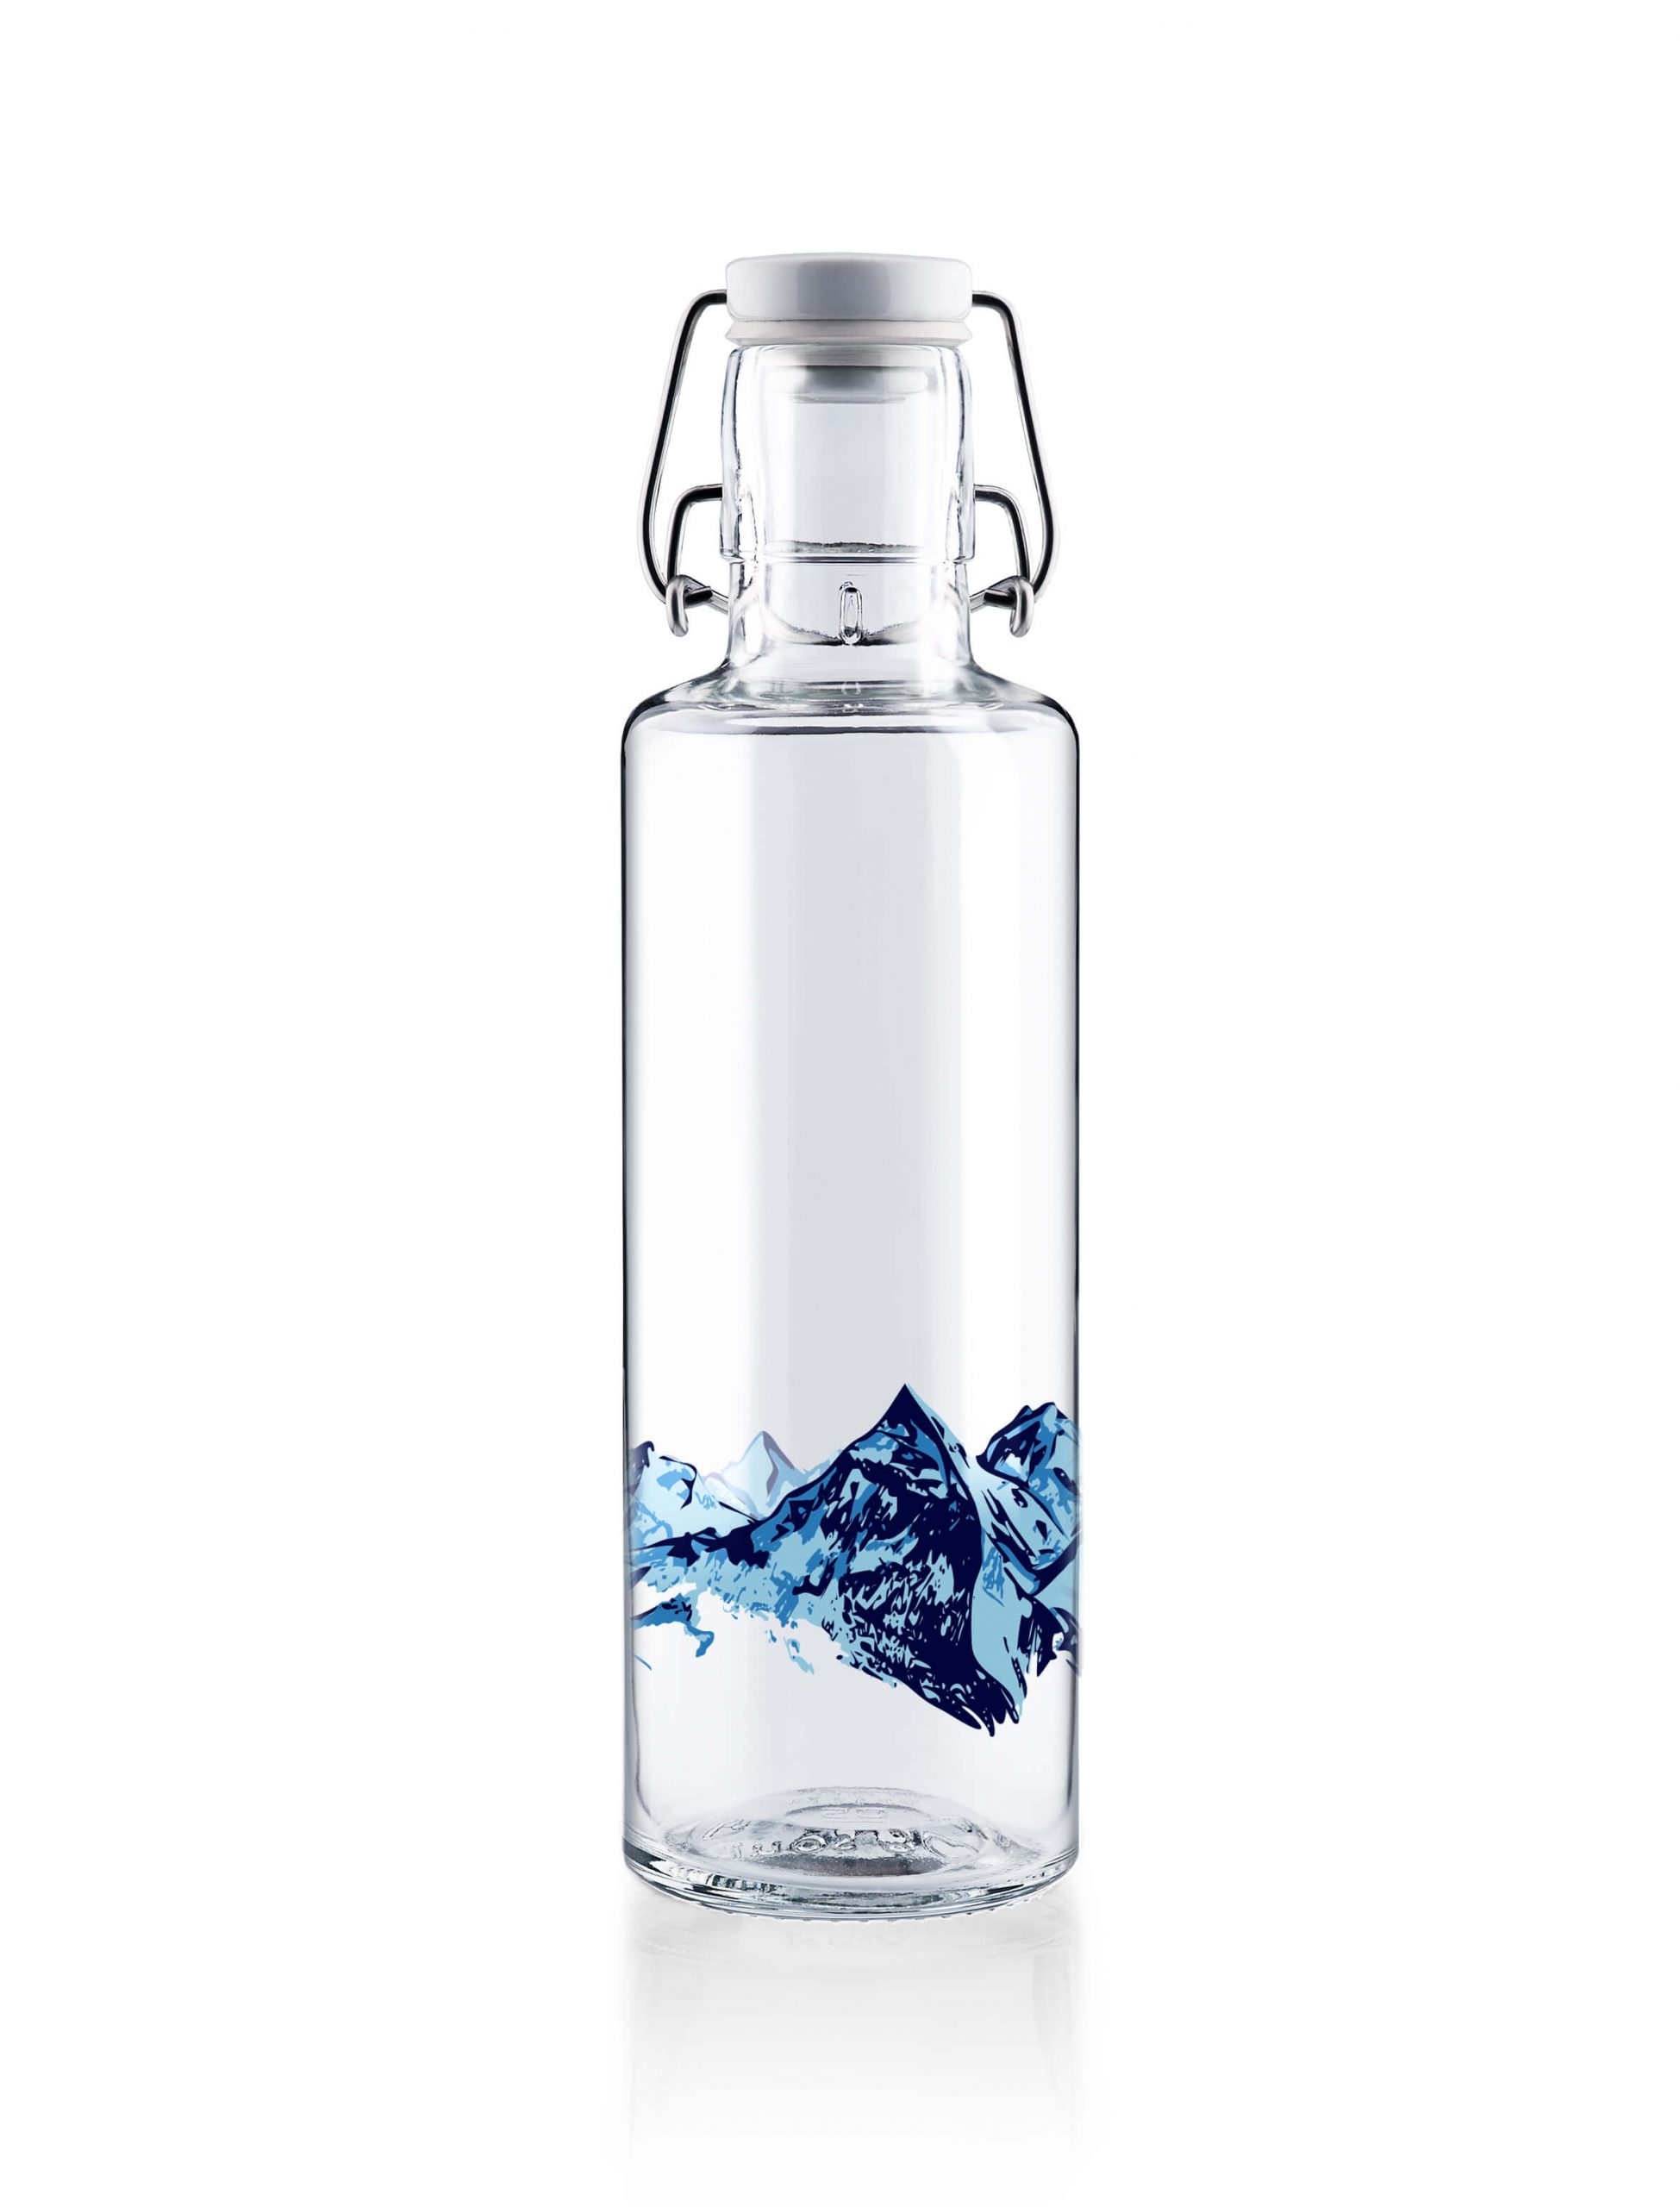 Soul bottle /glass bottle - The Alps